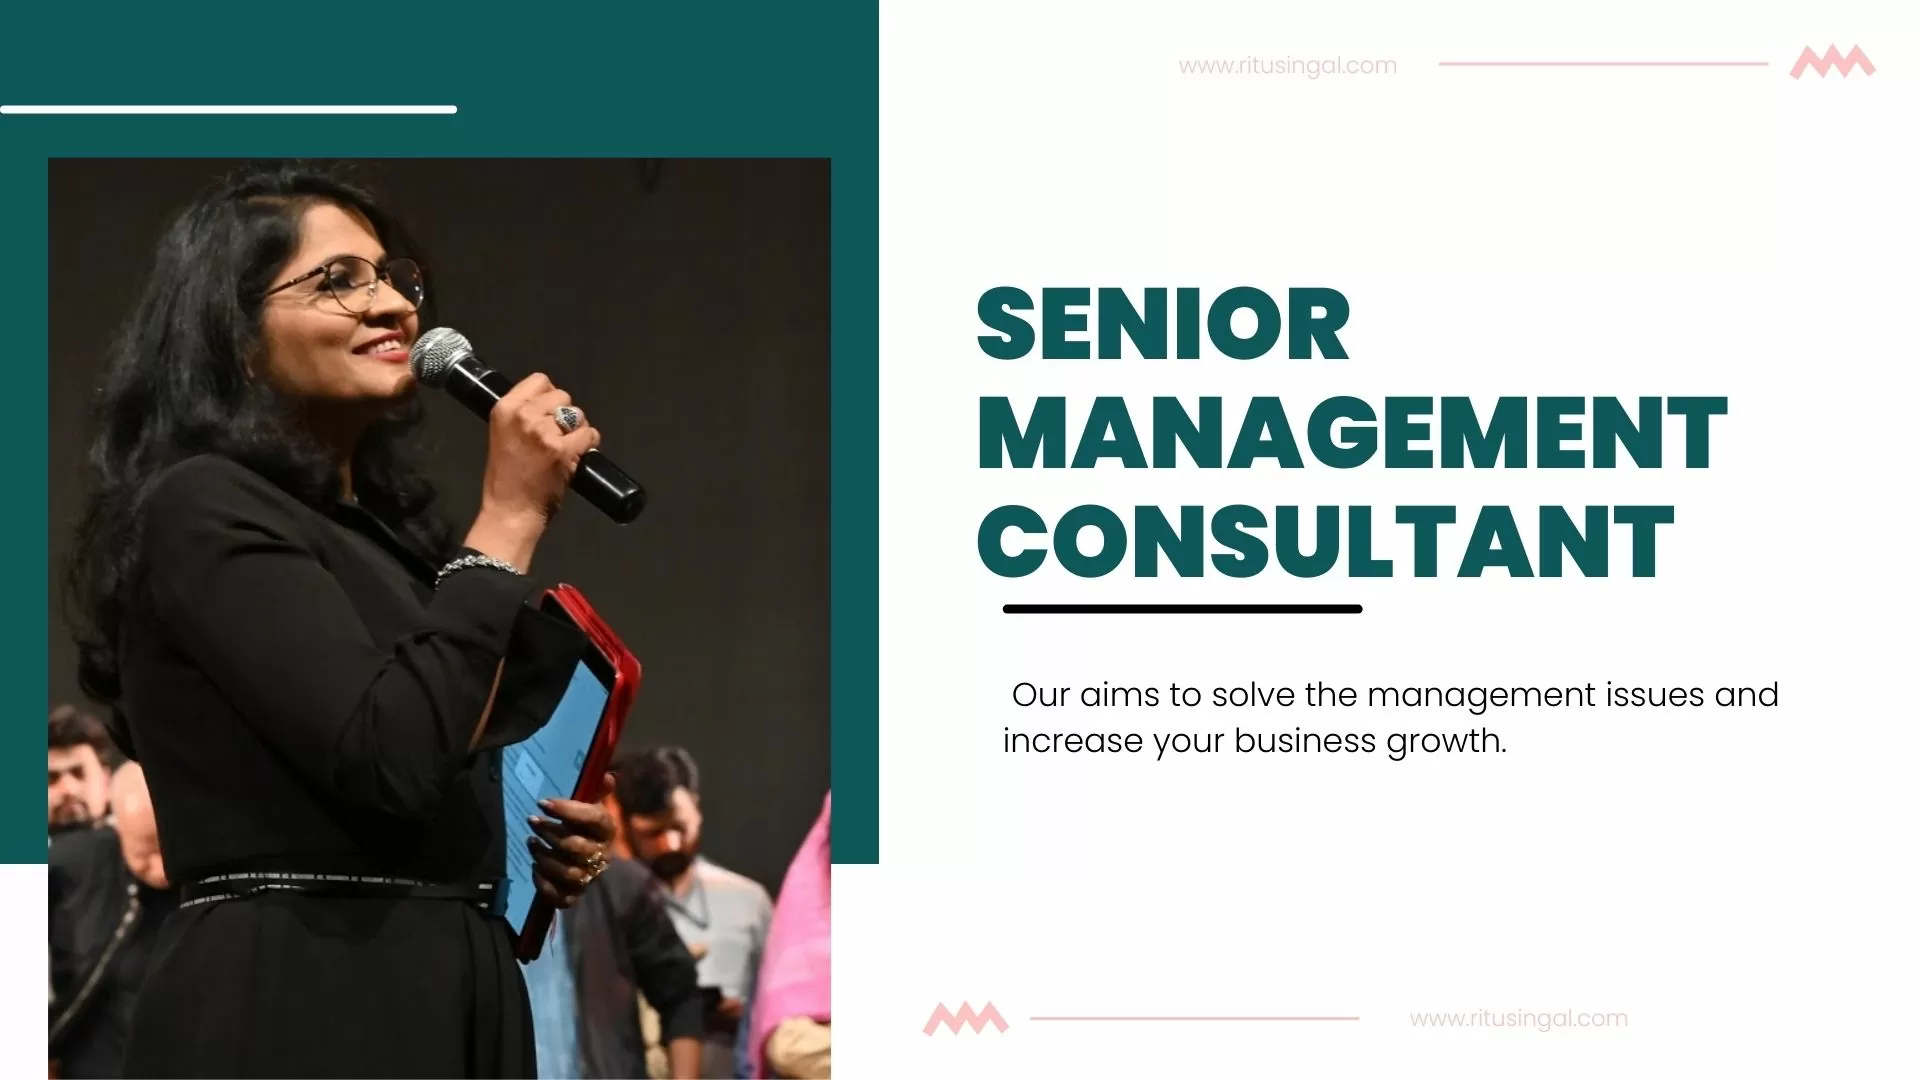 Senior Management Consultant and a Life Coach, Ritu Singal